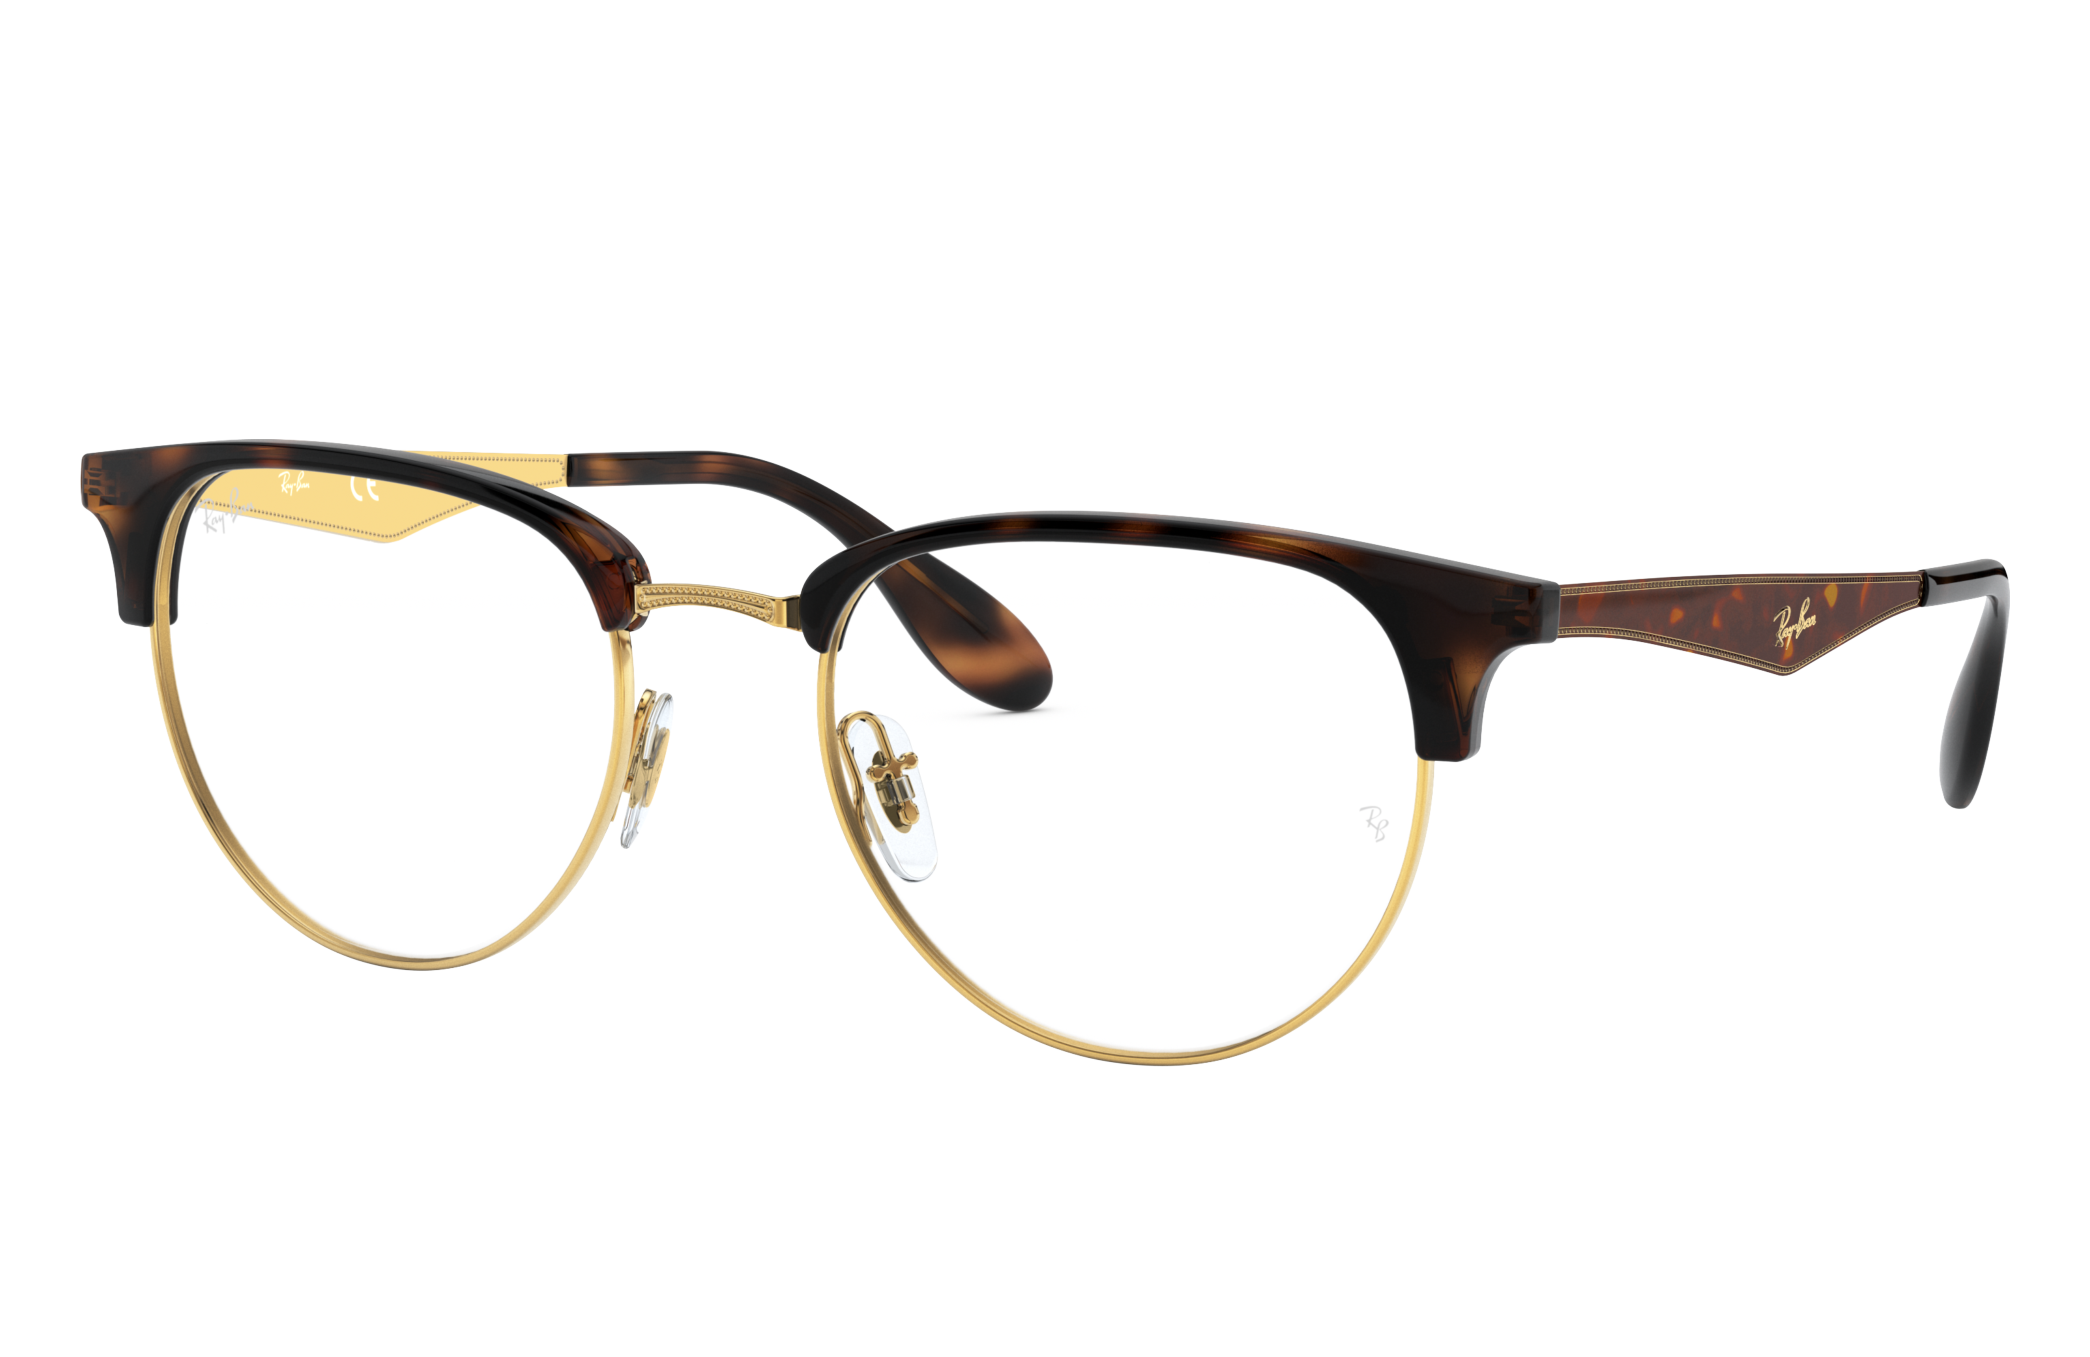 Rb6396 Optics Eyeglasses with Gold Frame | Ray-Ban®